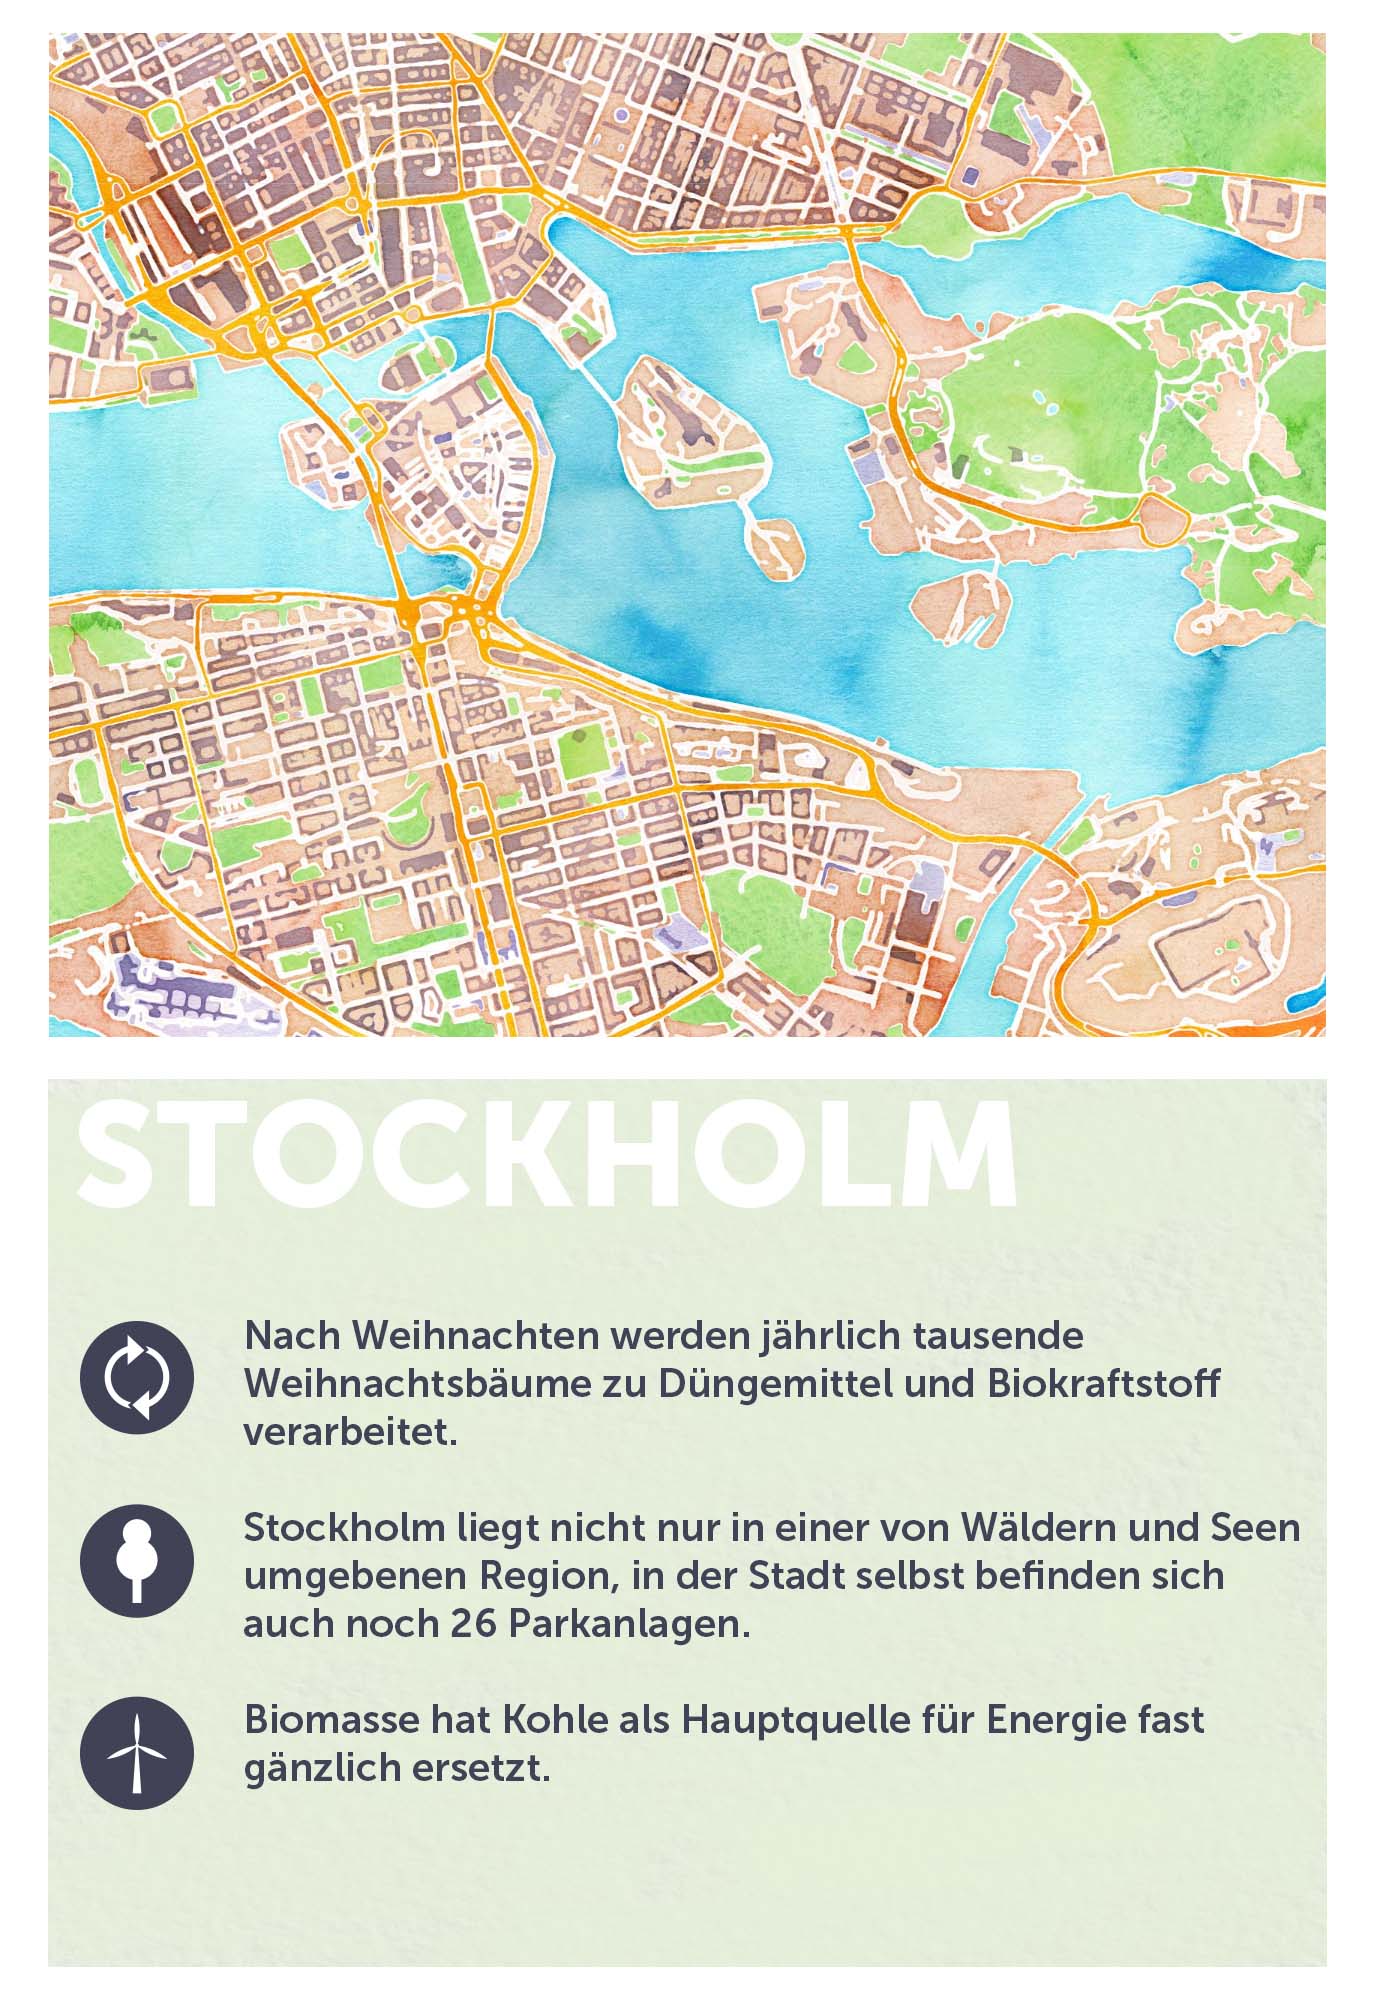 Stockholm grüne Stadt in Europa